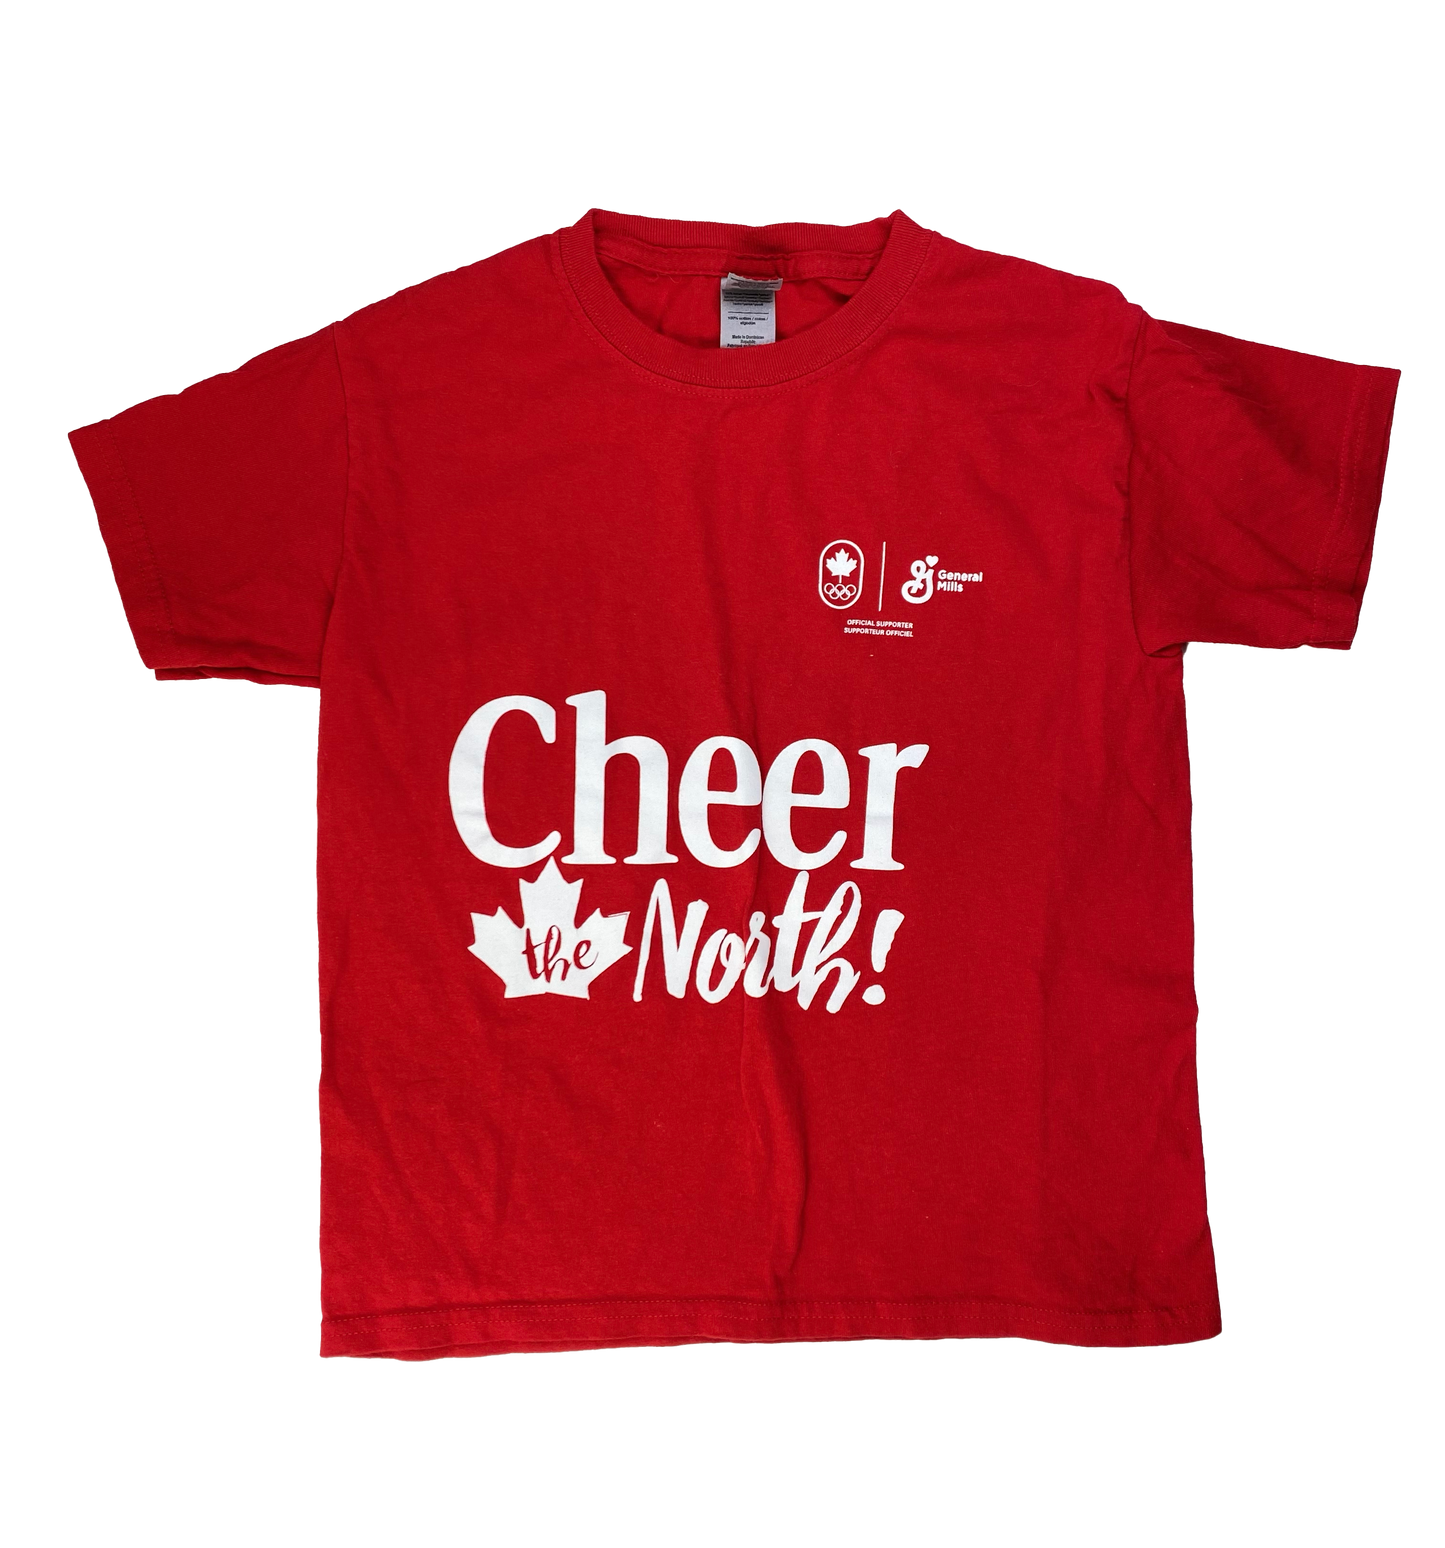 Gildan Red T-Shirt "Cheer The North" 6